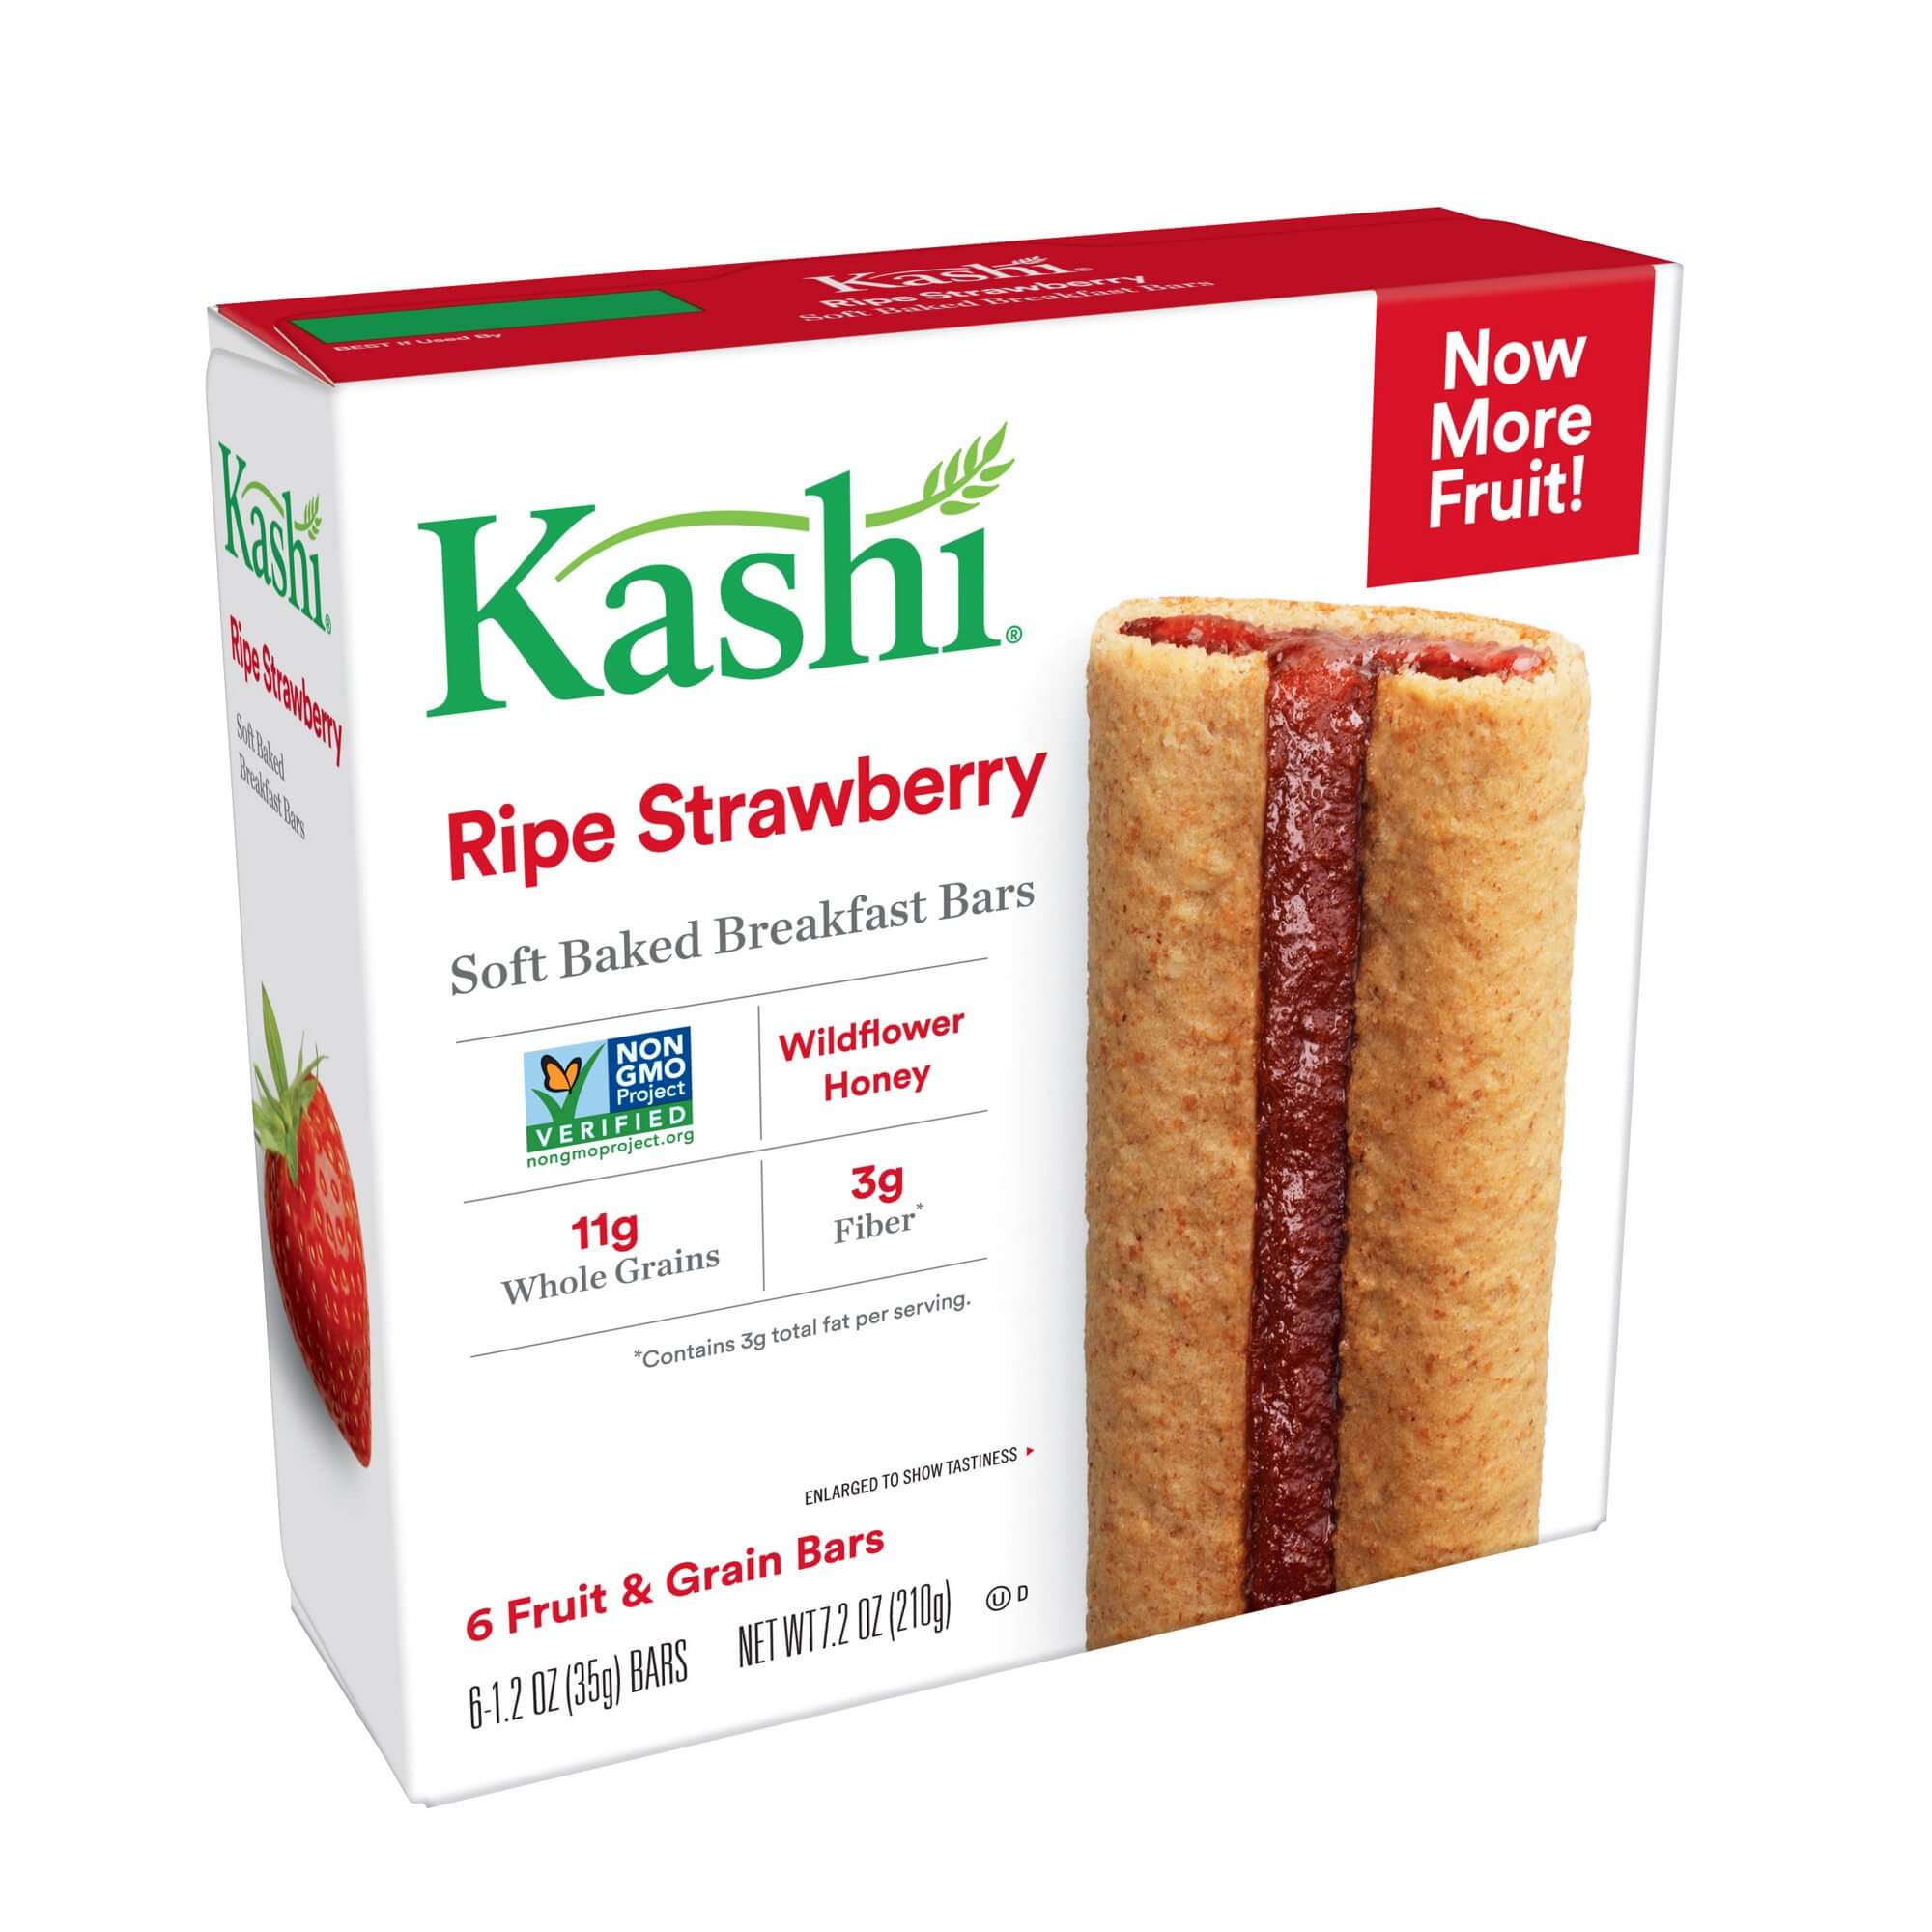 Kashi Ripe Strawberry Cereal Bars